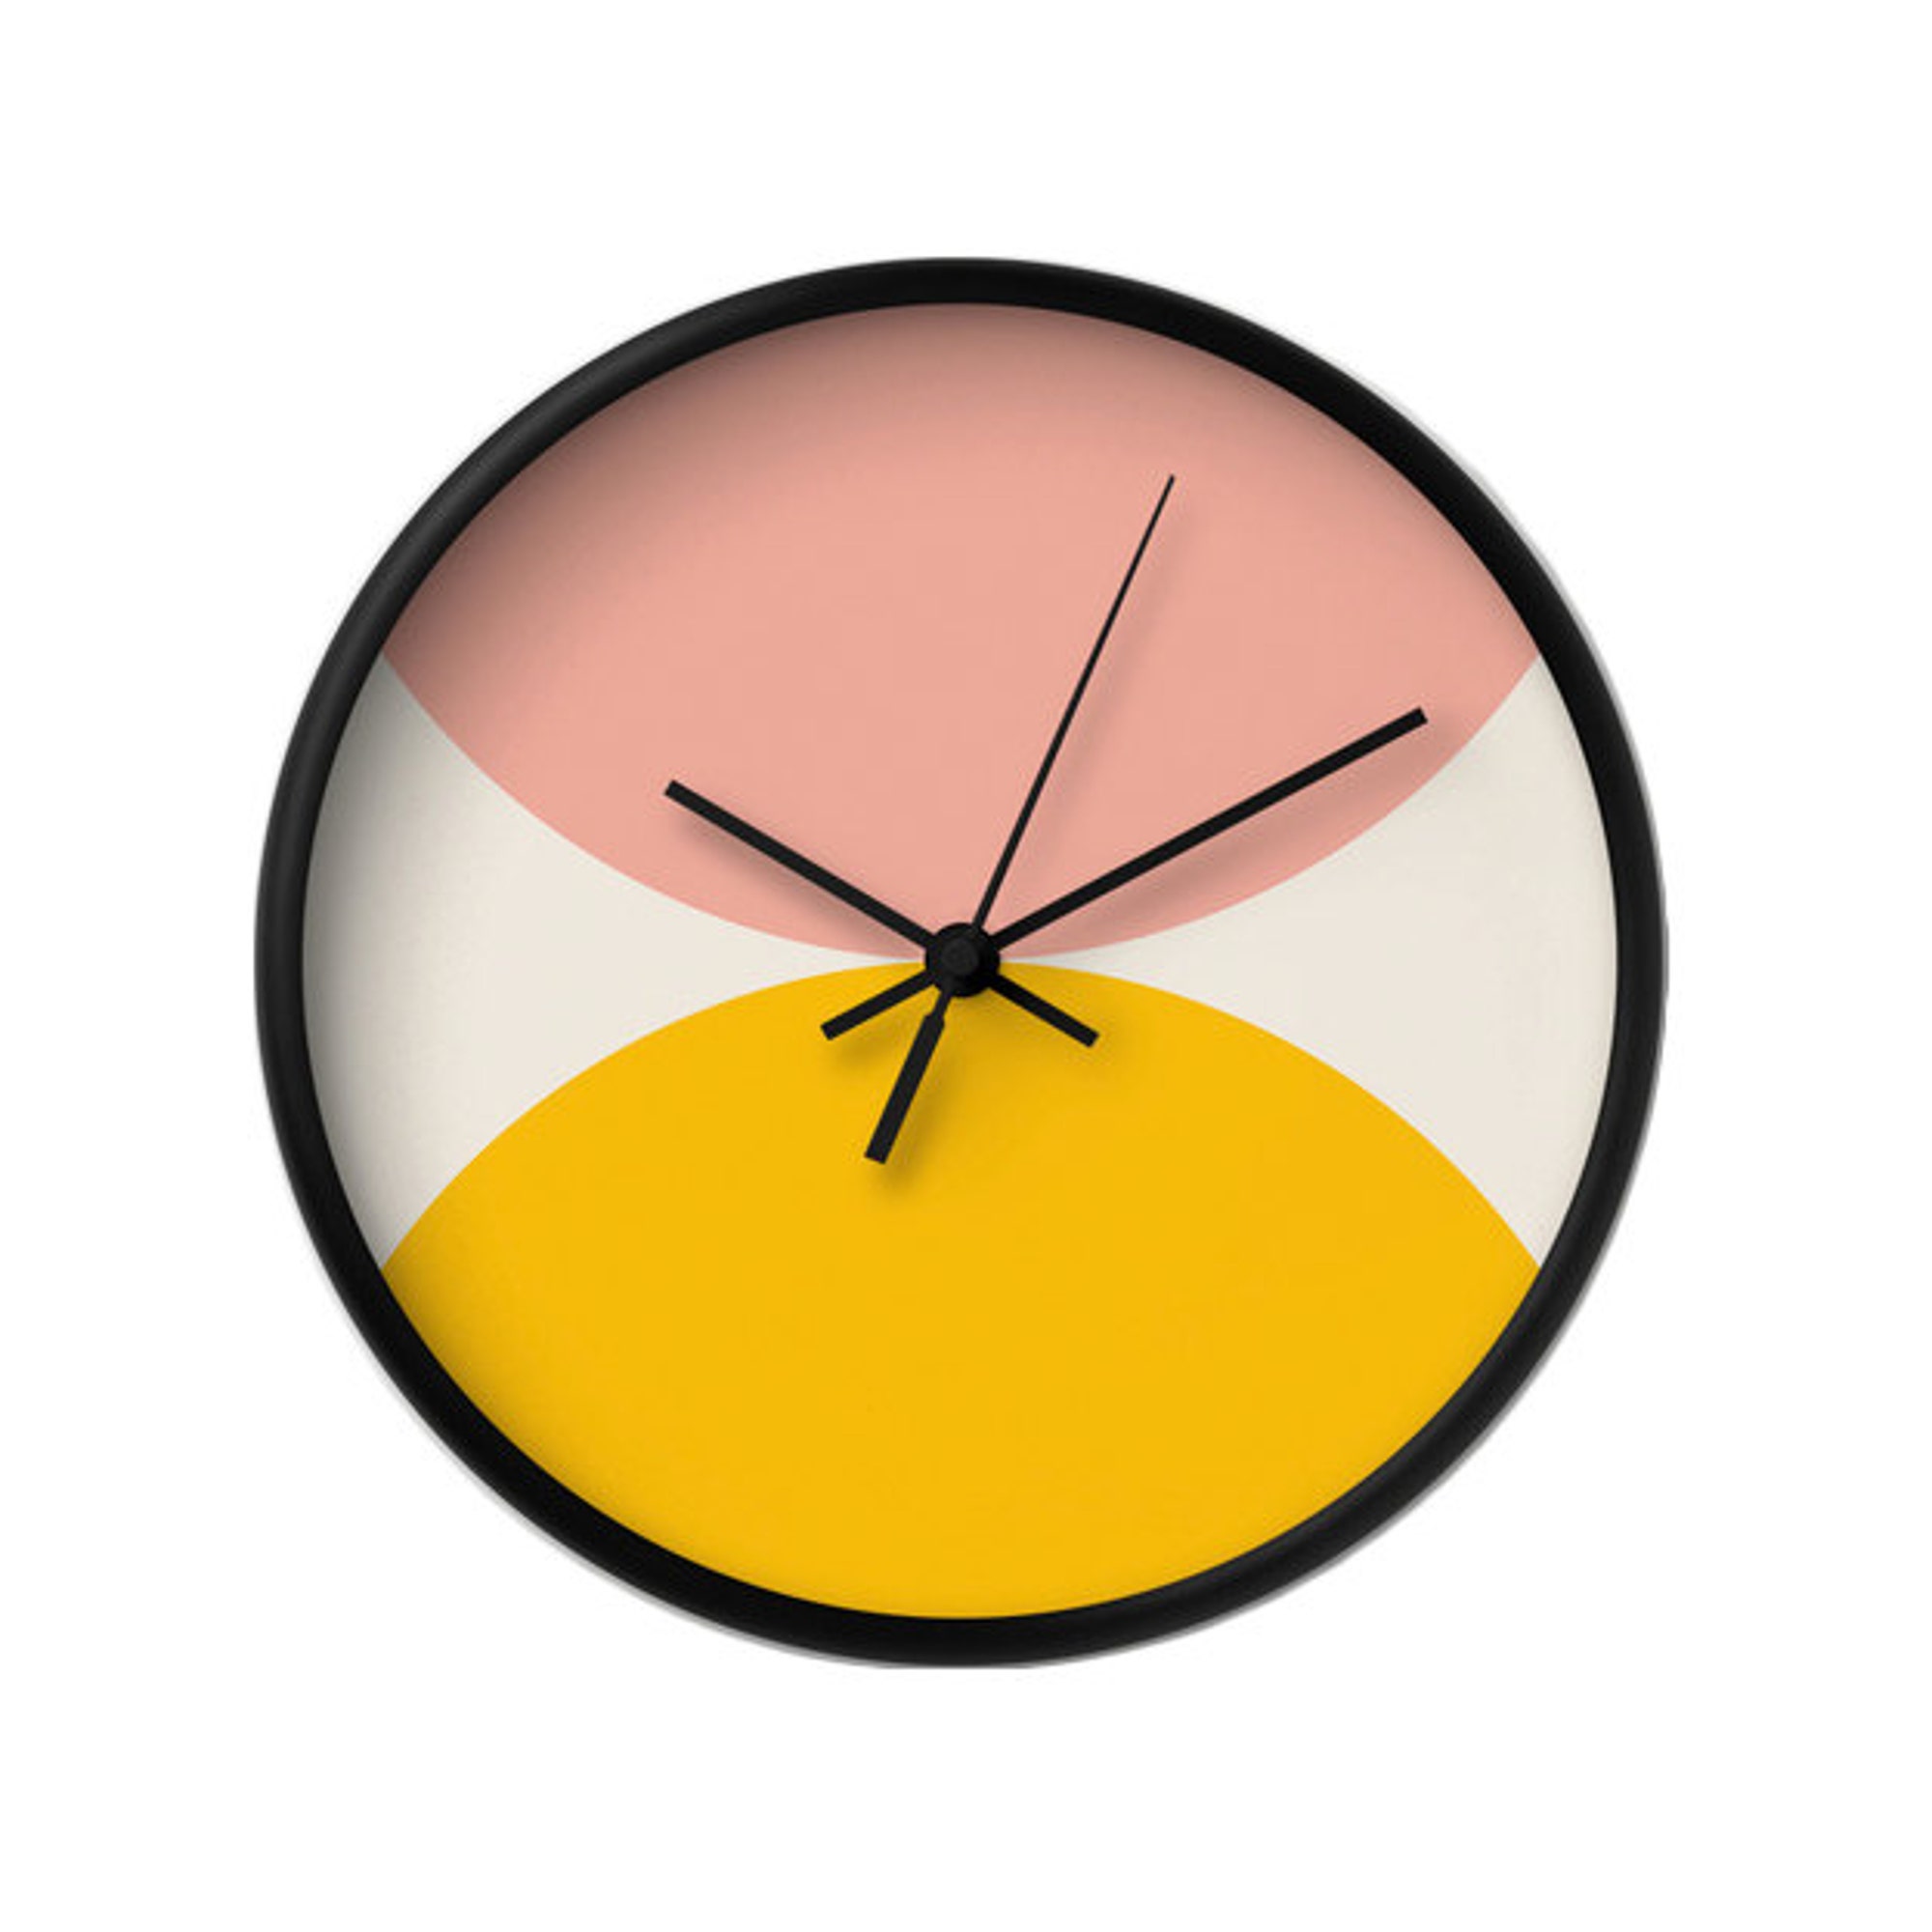 Yellow and pink wall clock. Mid century modern clock